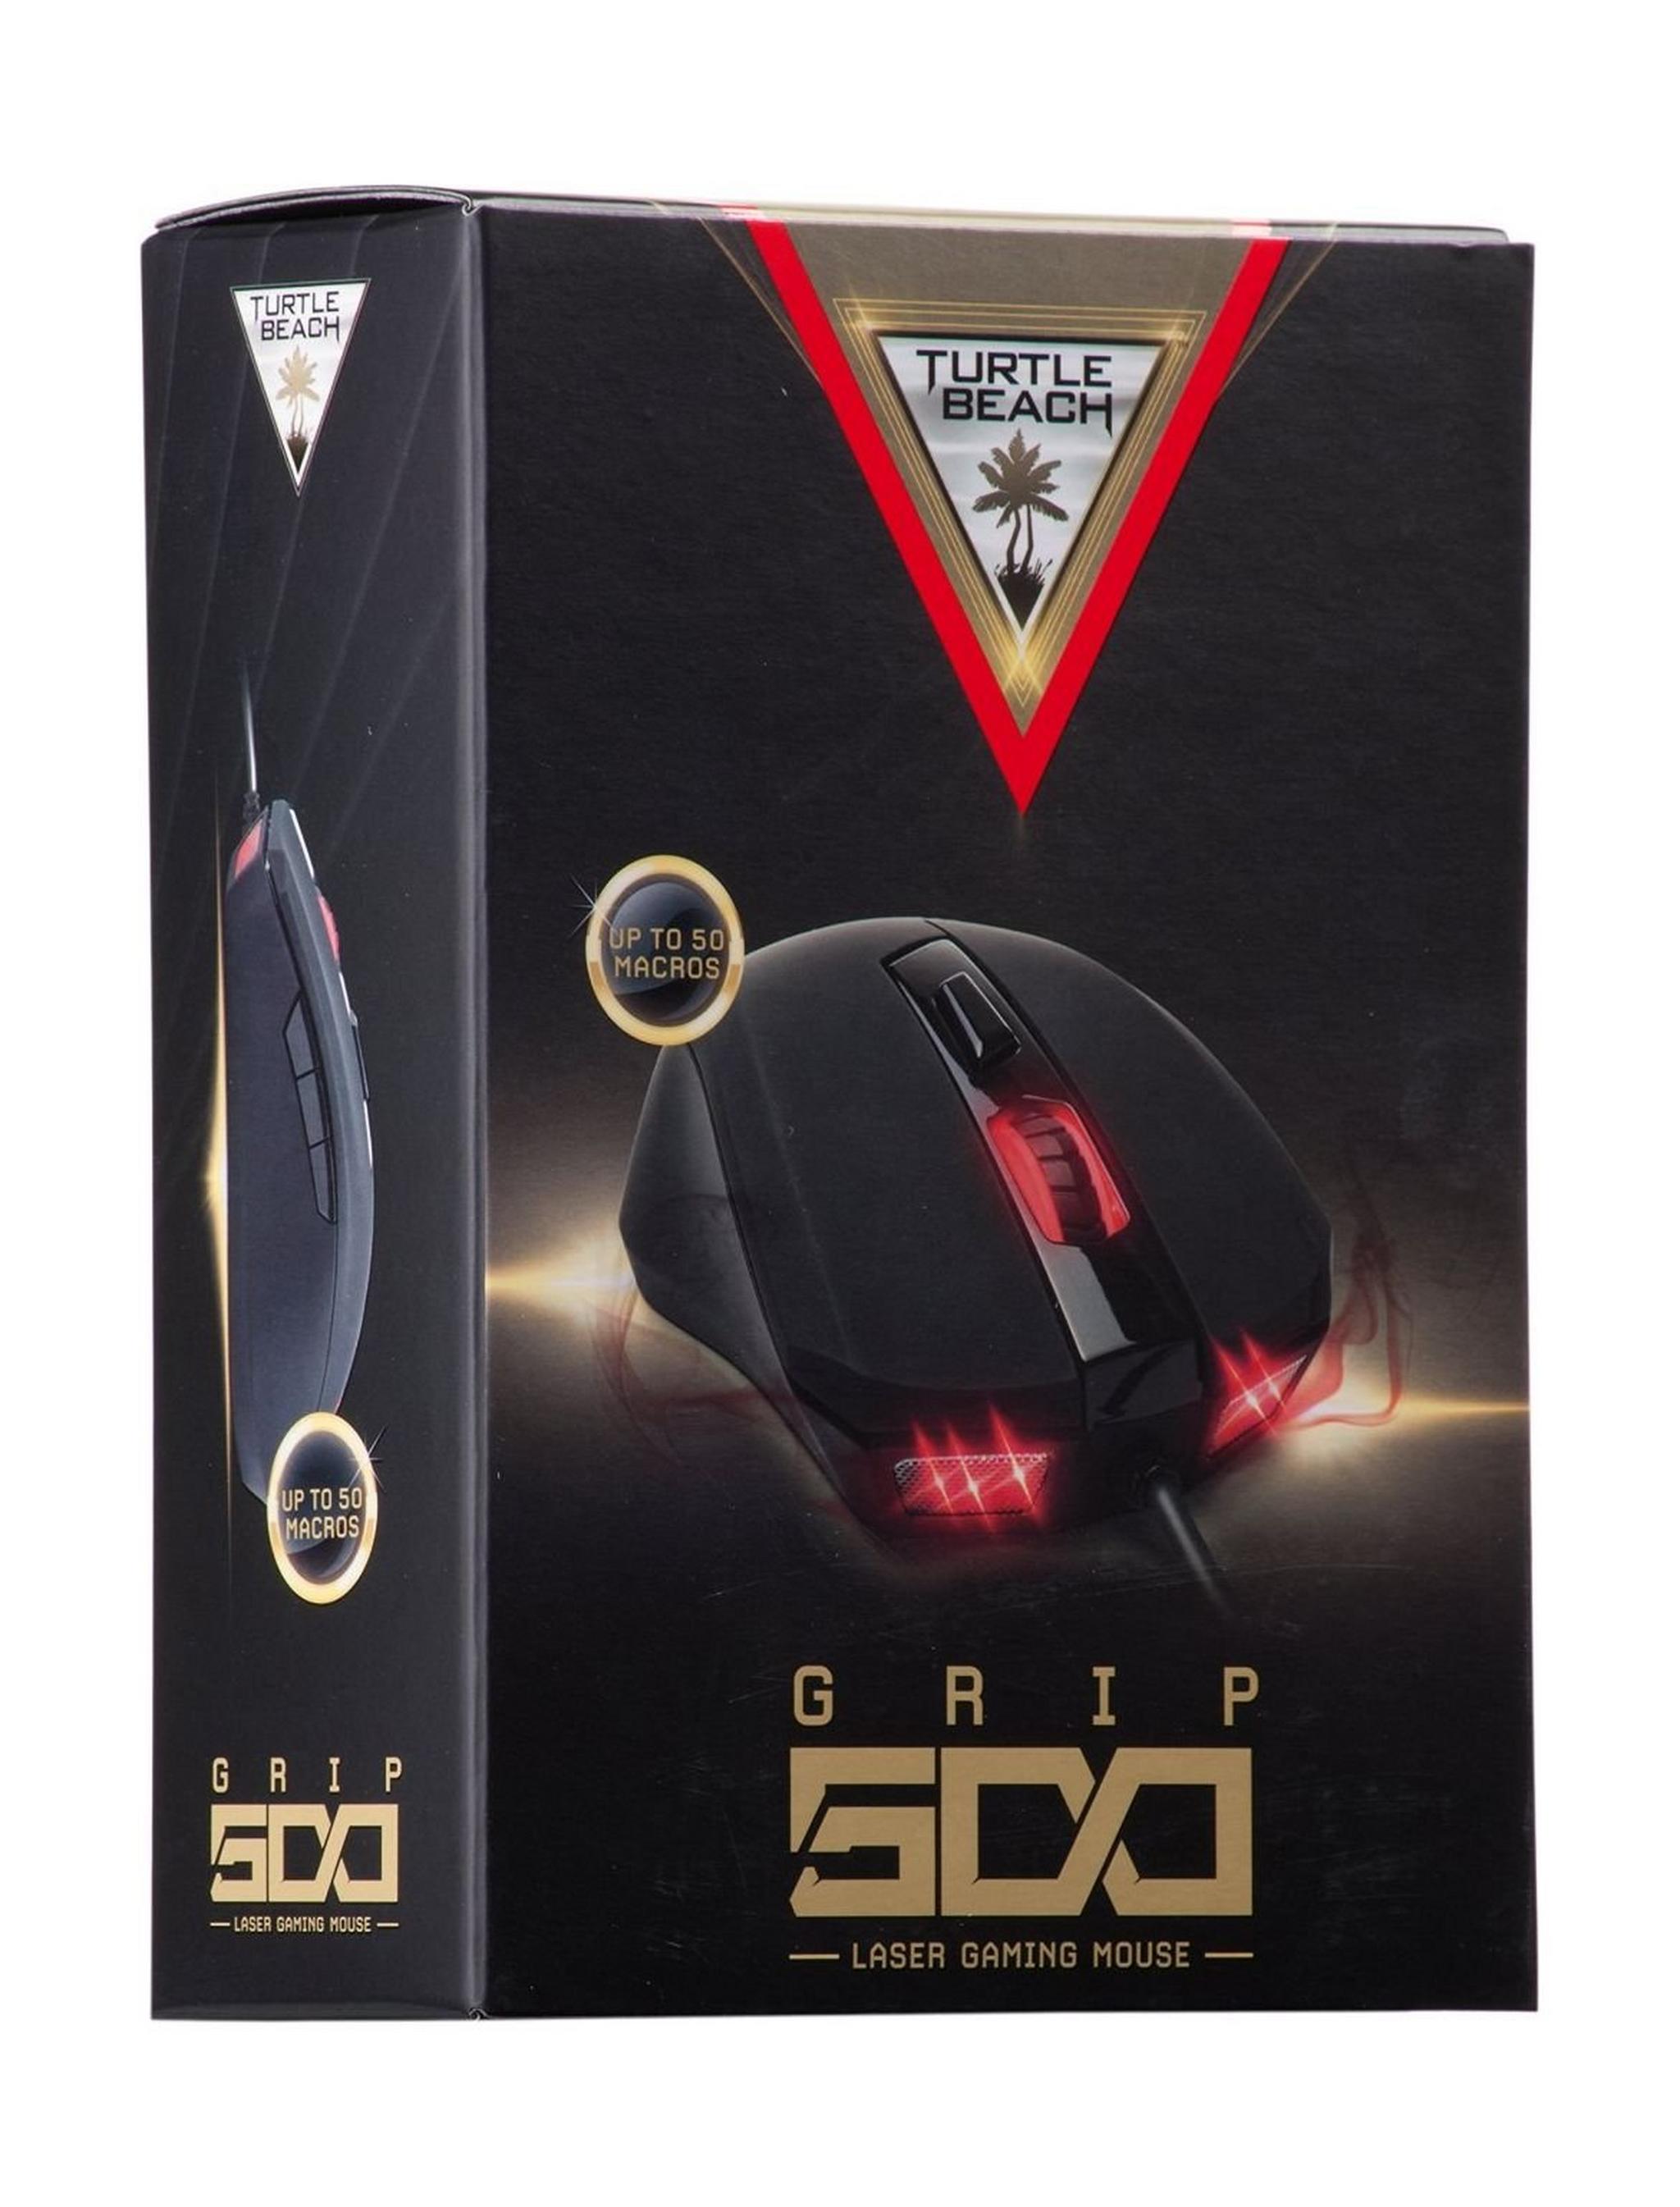 Turtle Beach Grip 500 Laser Gaming Mouse - Black